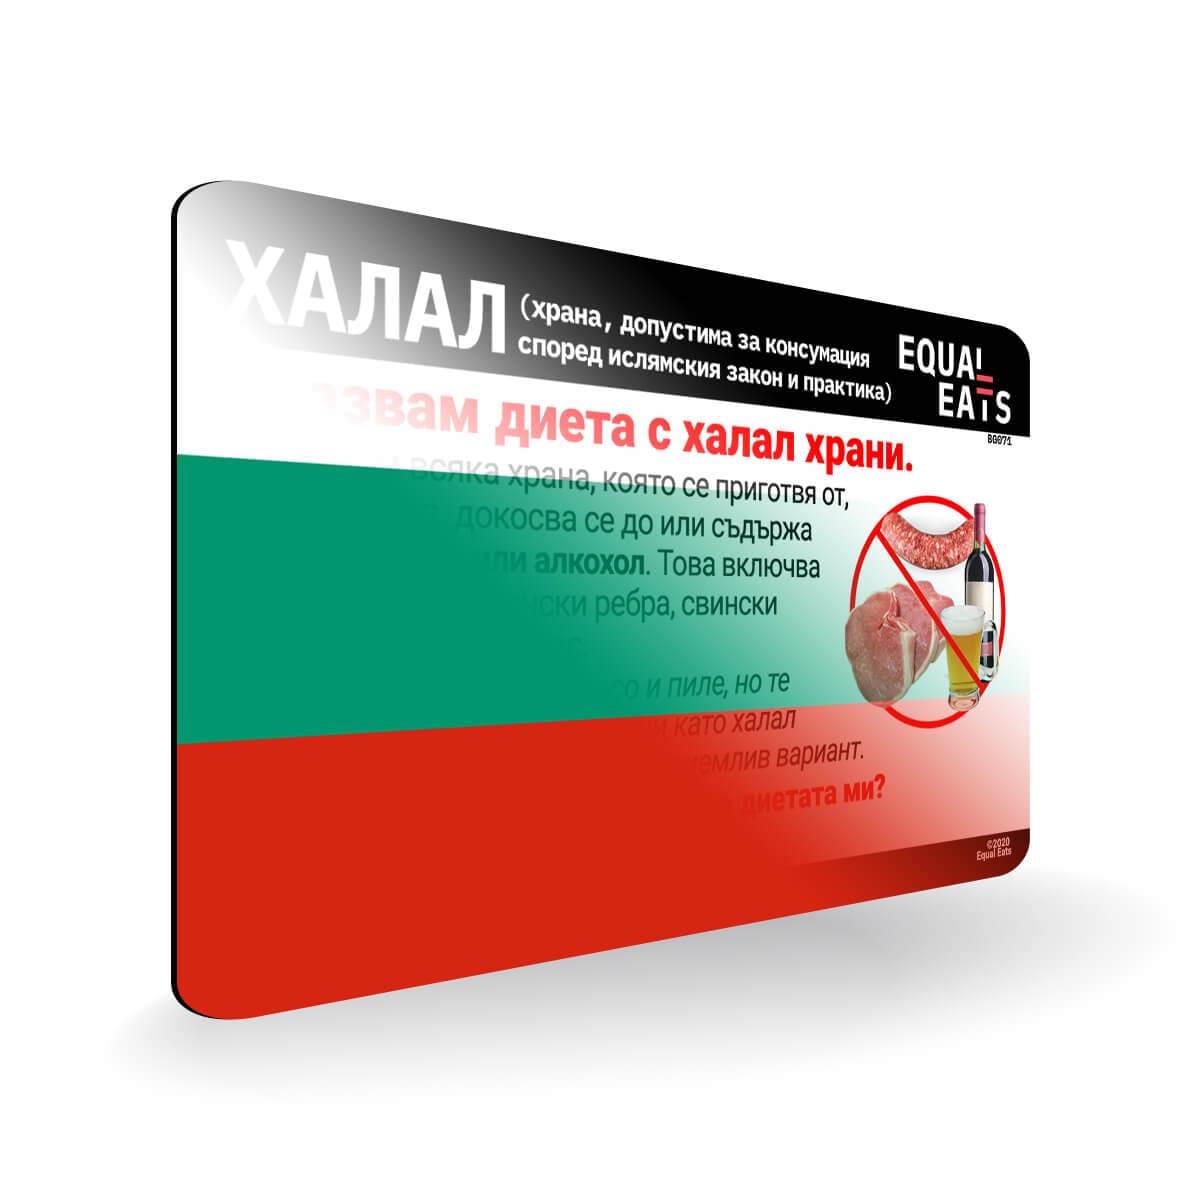 Halal Diet in Bulgarian. Halal Food Card for Bulgaria